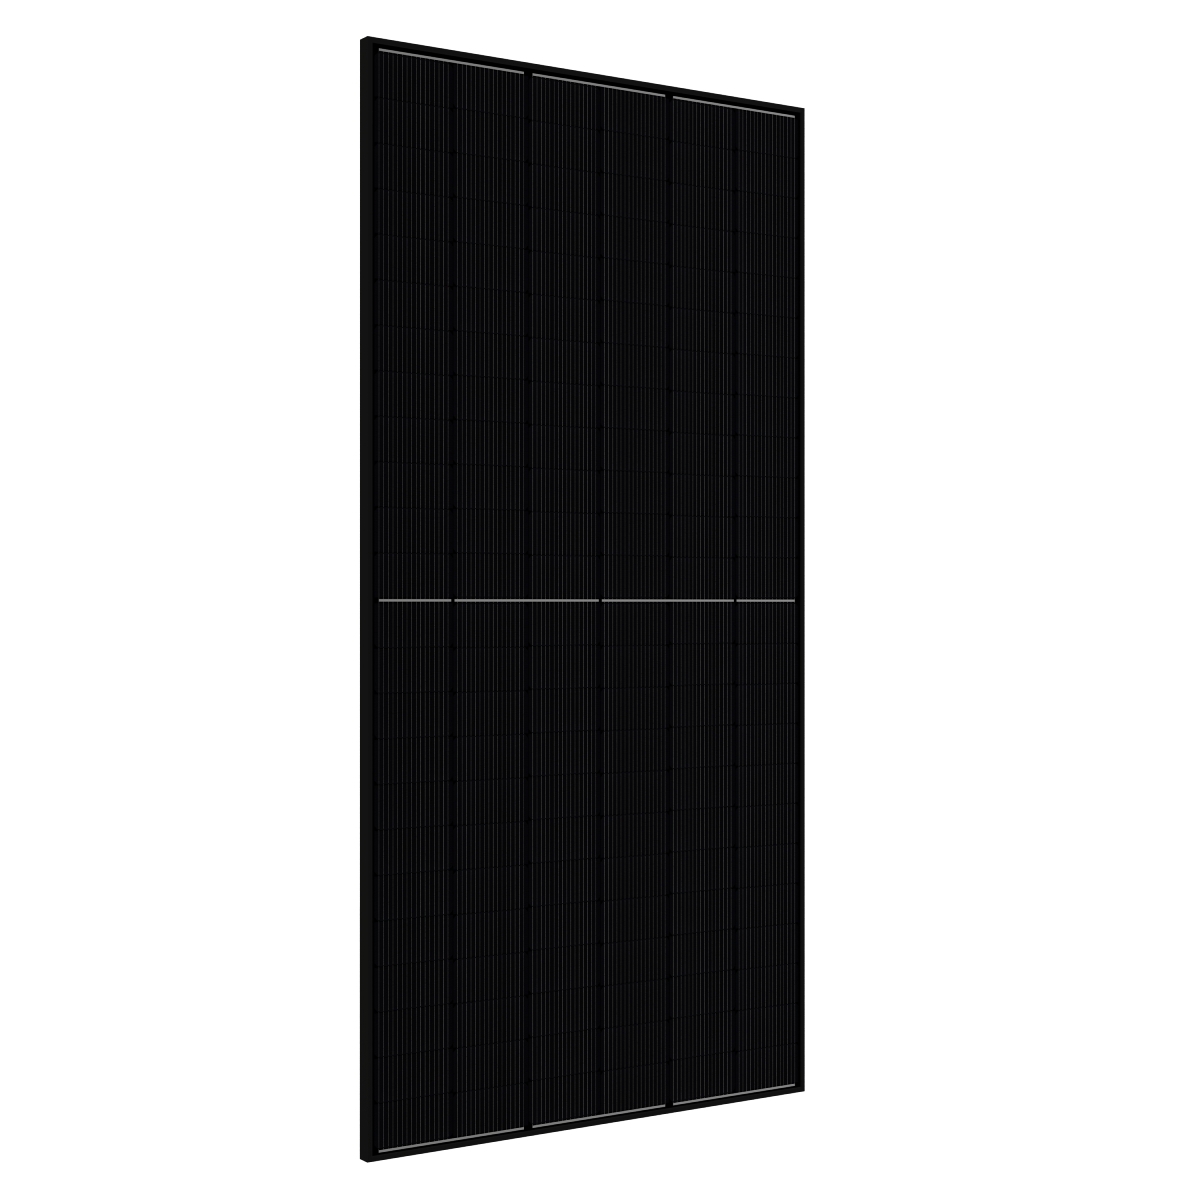 TommaTech 580Wp 144TNFB M10 TopCon Dark Series Solar Panel